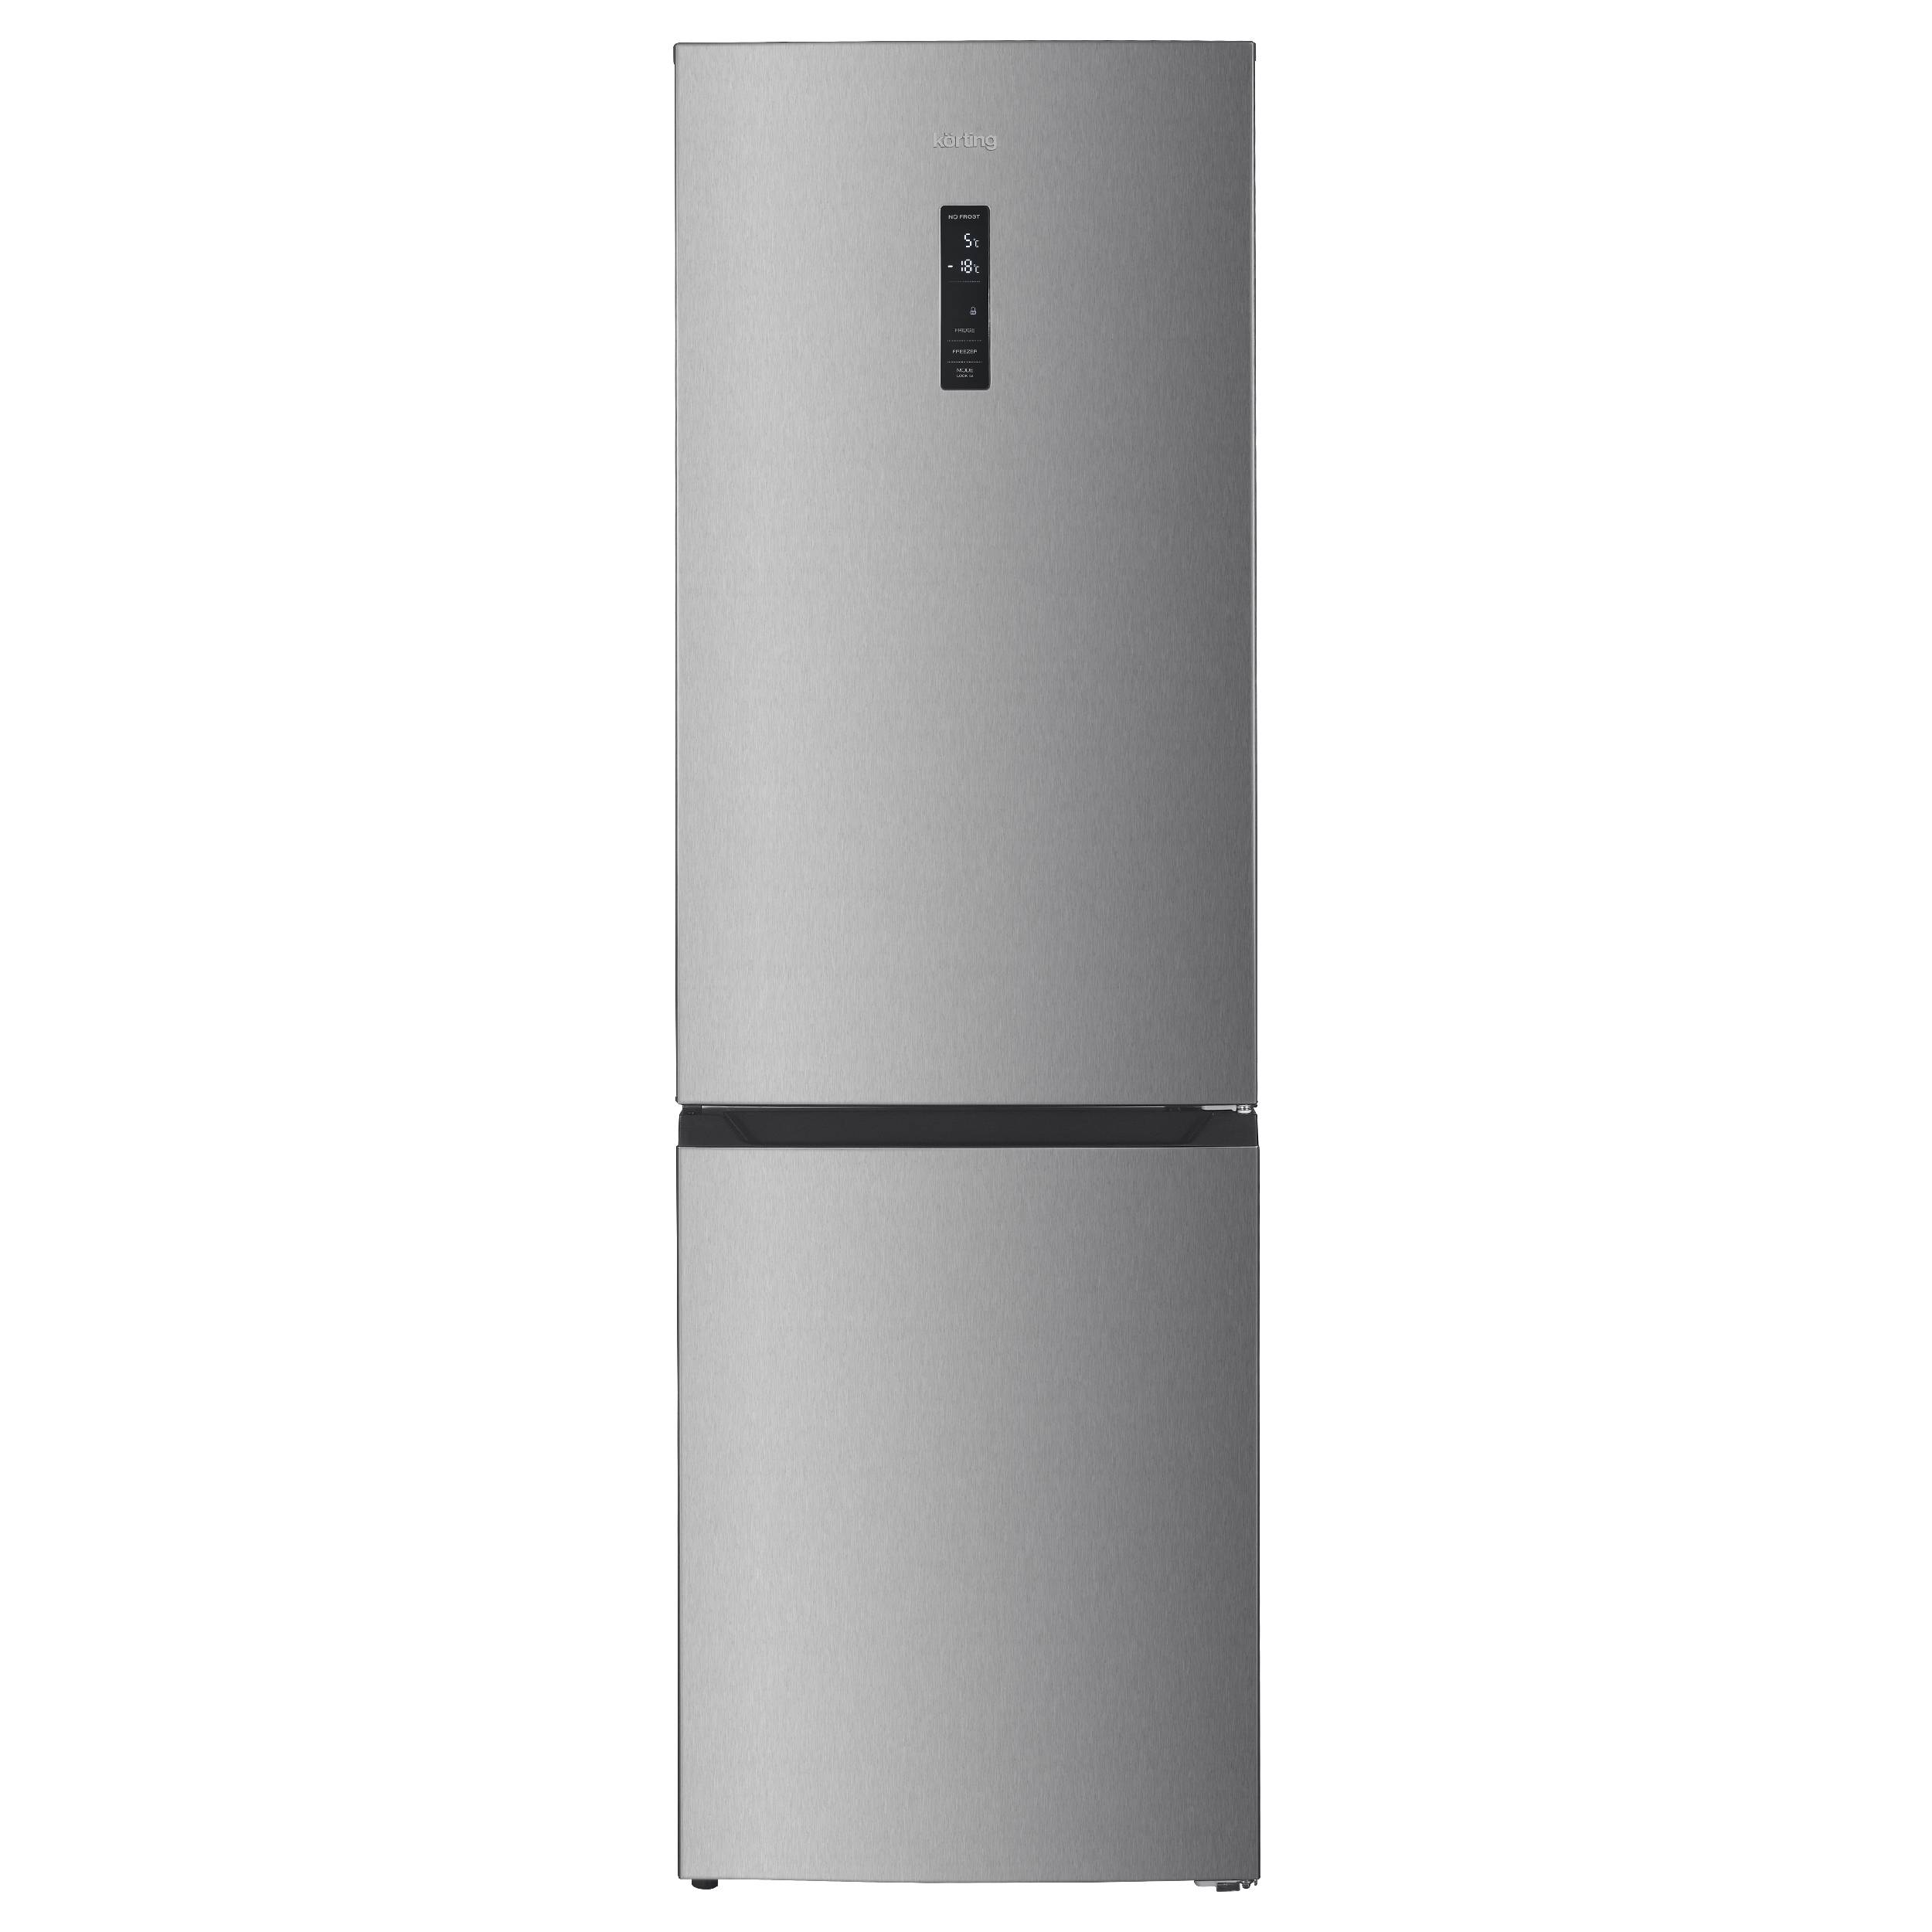 Холодильник Korting KNFC 62980 X серебристый, серый холодильник korting knfm 91868 x серый